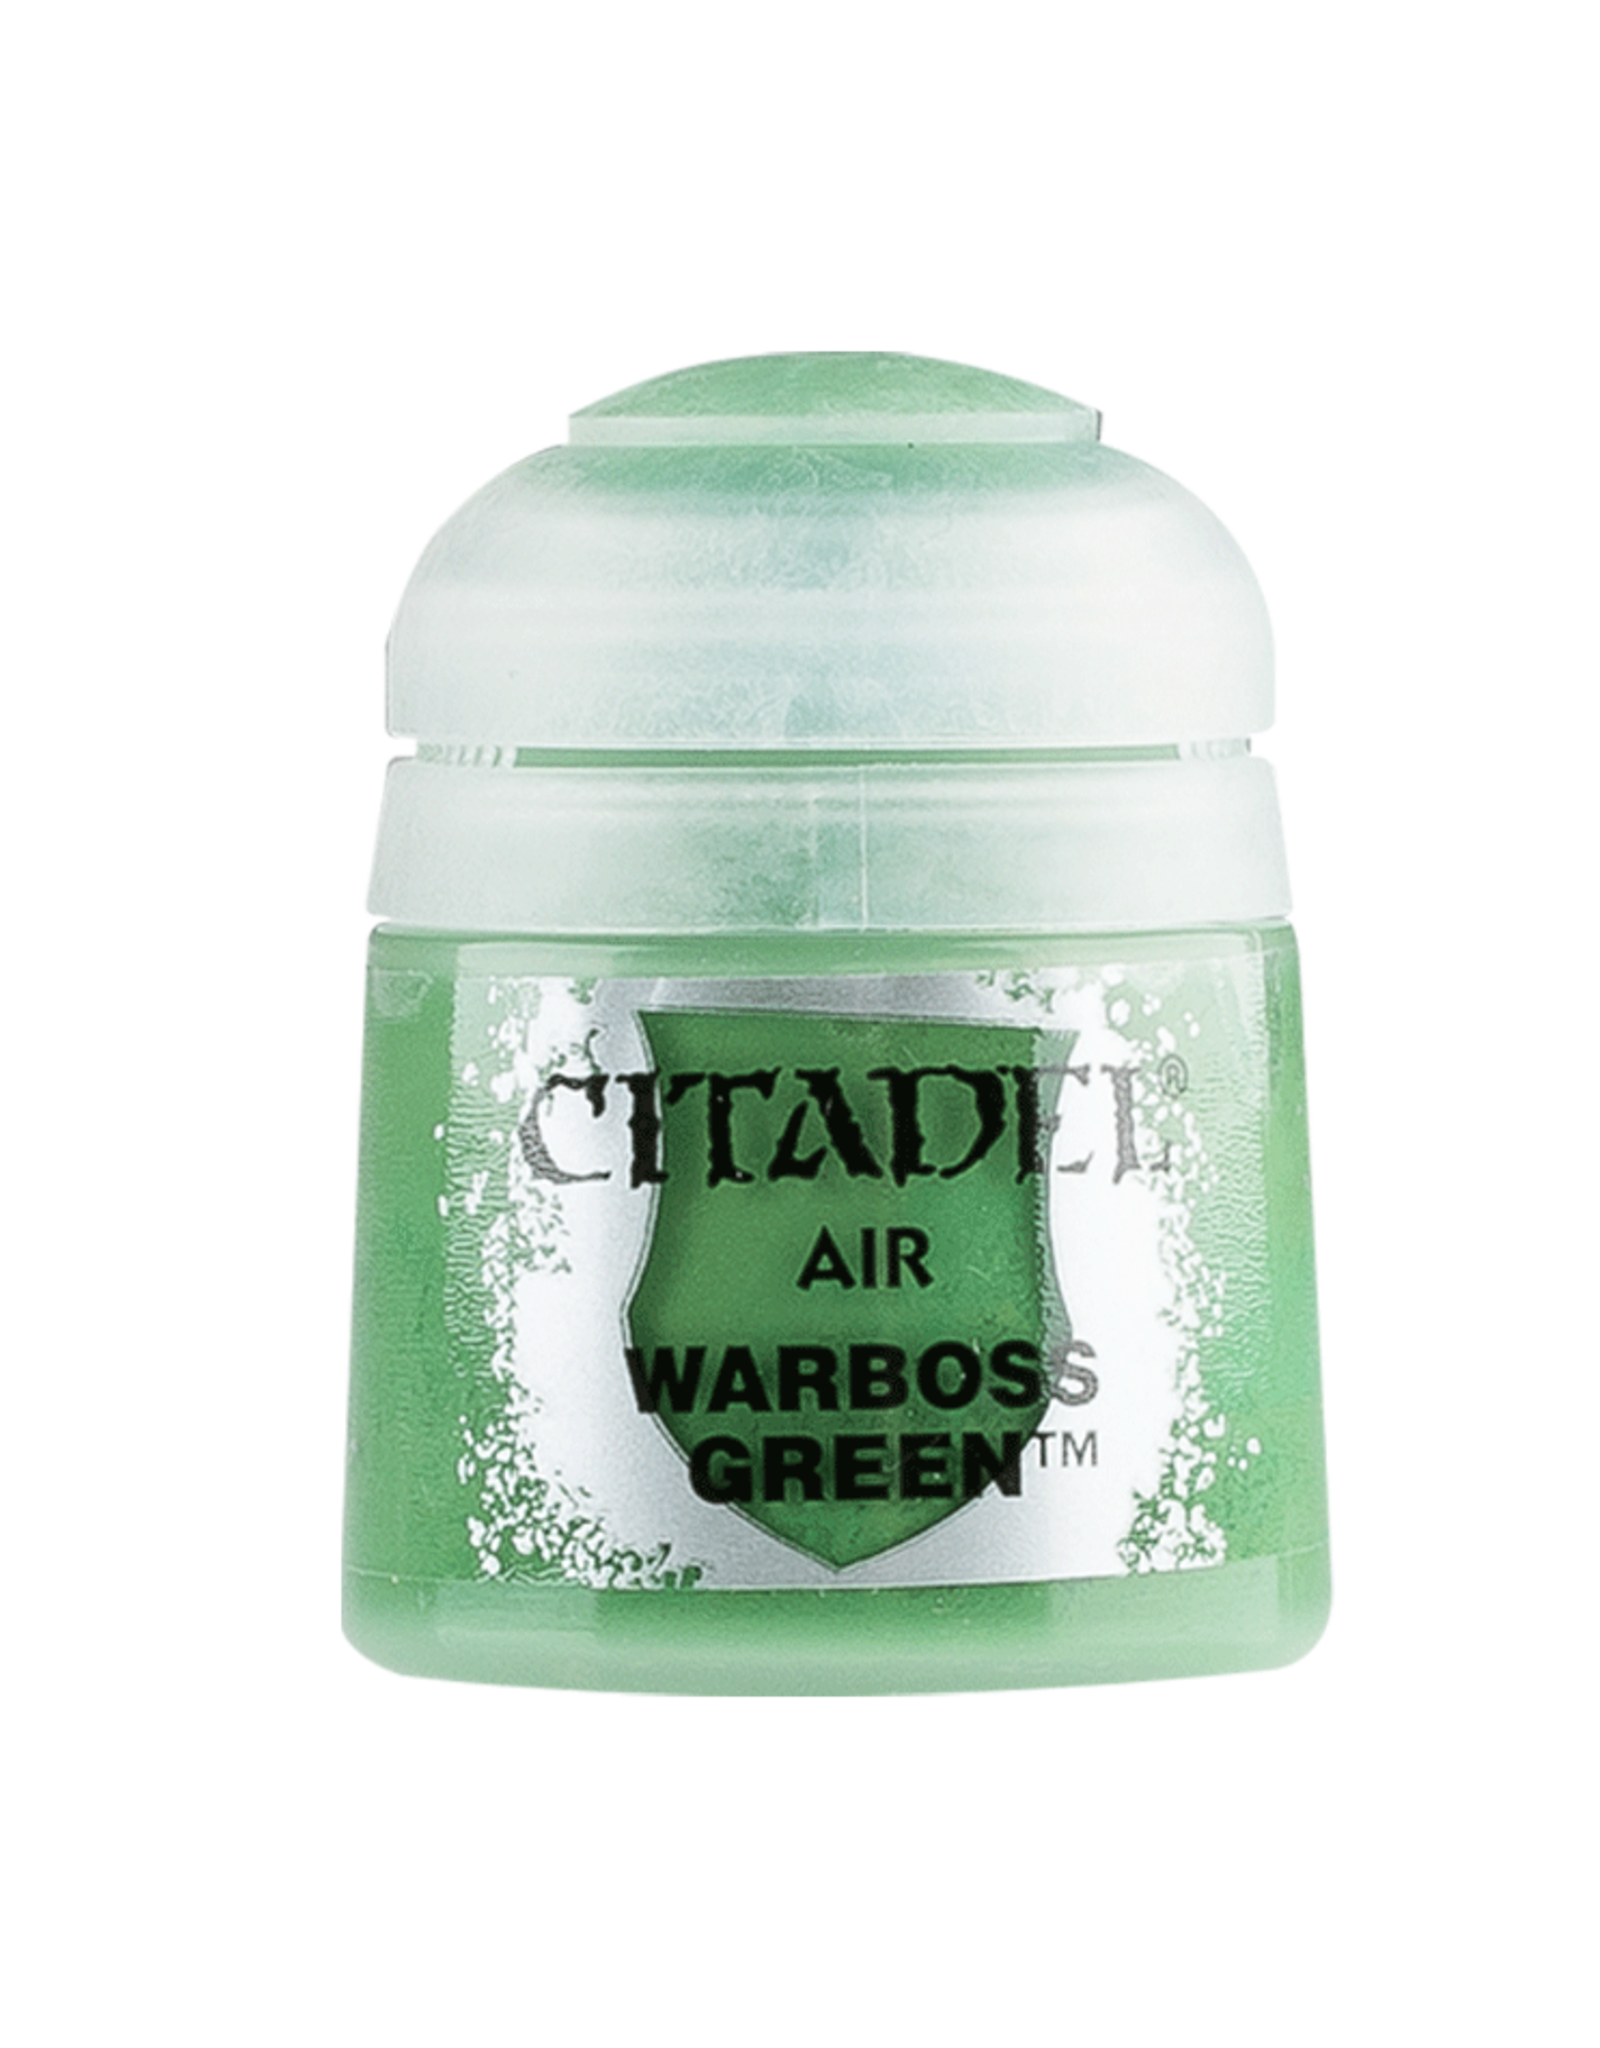 Citadel (Games Workshop) Citadel Air: Warboss Green (24ml) (Last chance to buy)